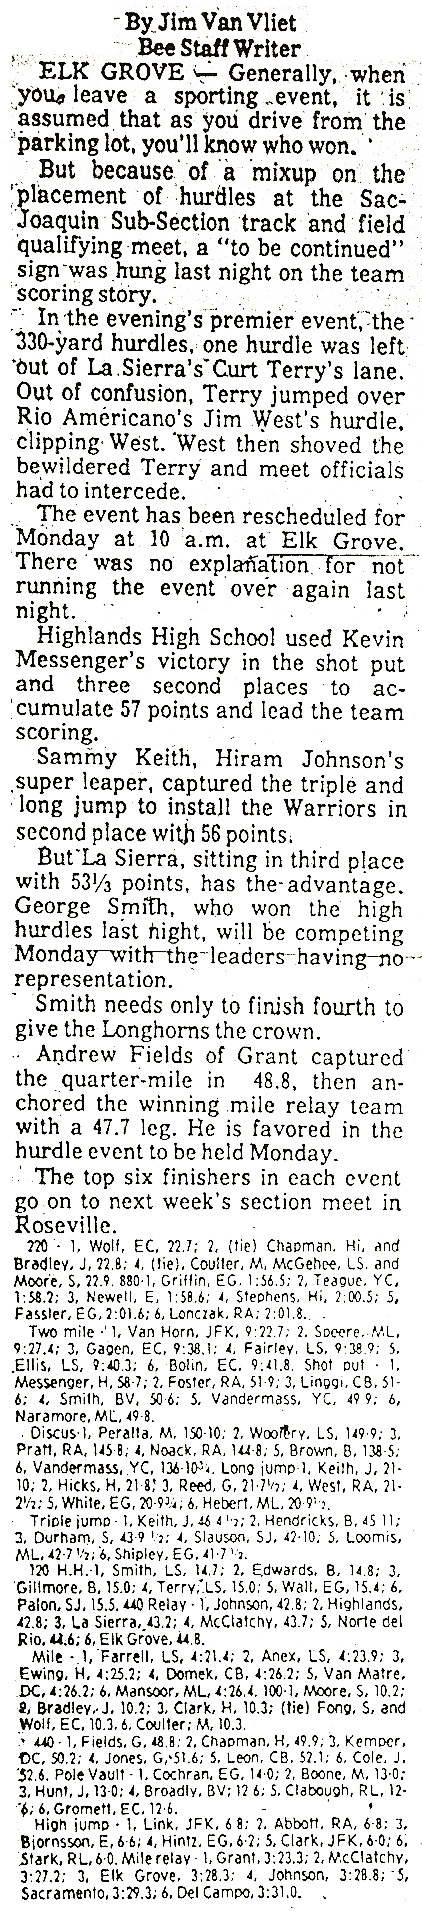 1976 Sac Joaquin Sub Section II Finals Results